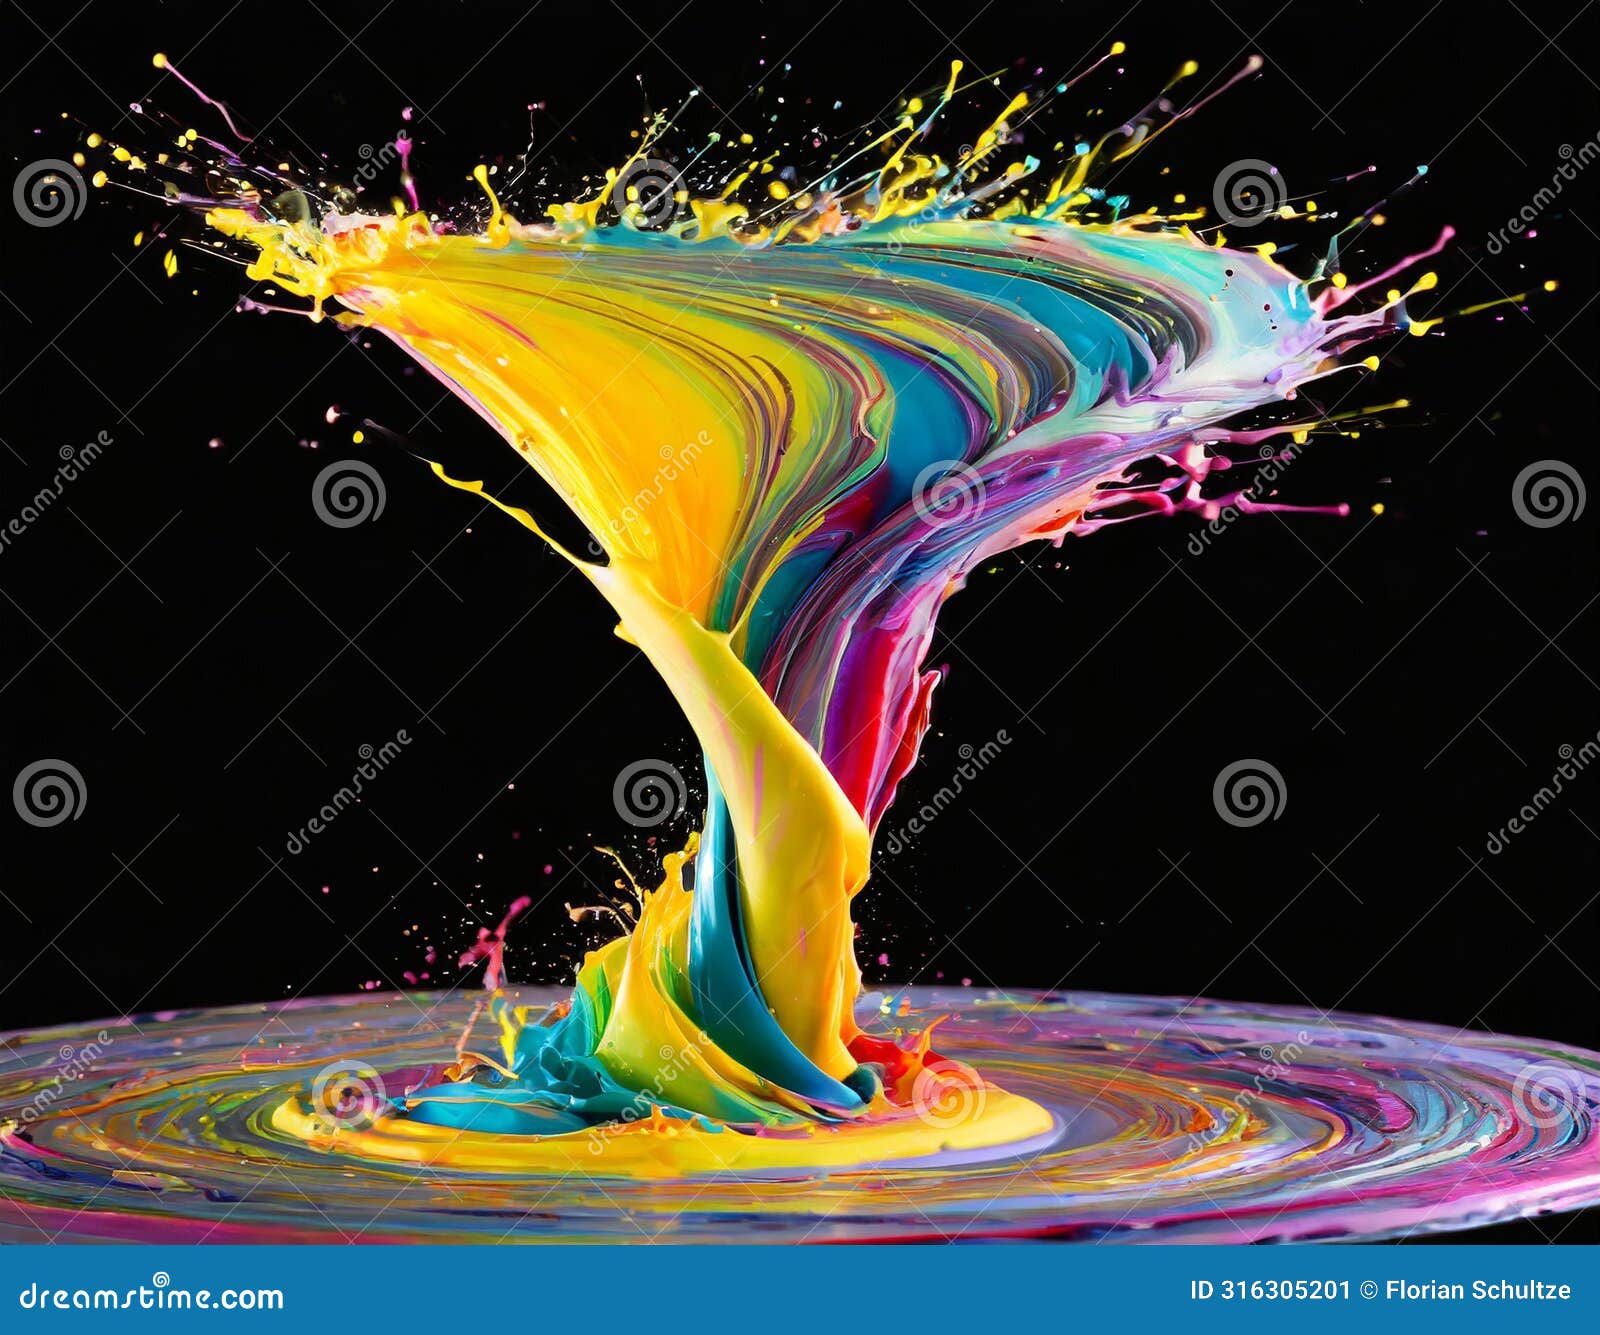 colorful abstract paint splash resembling a vibrant tornado